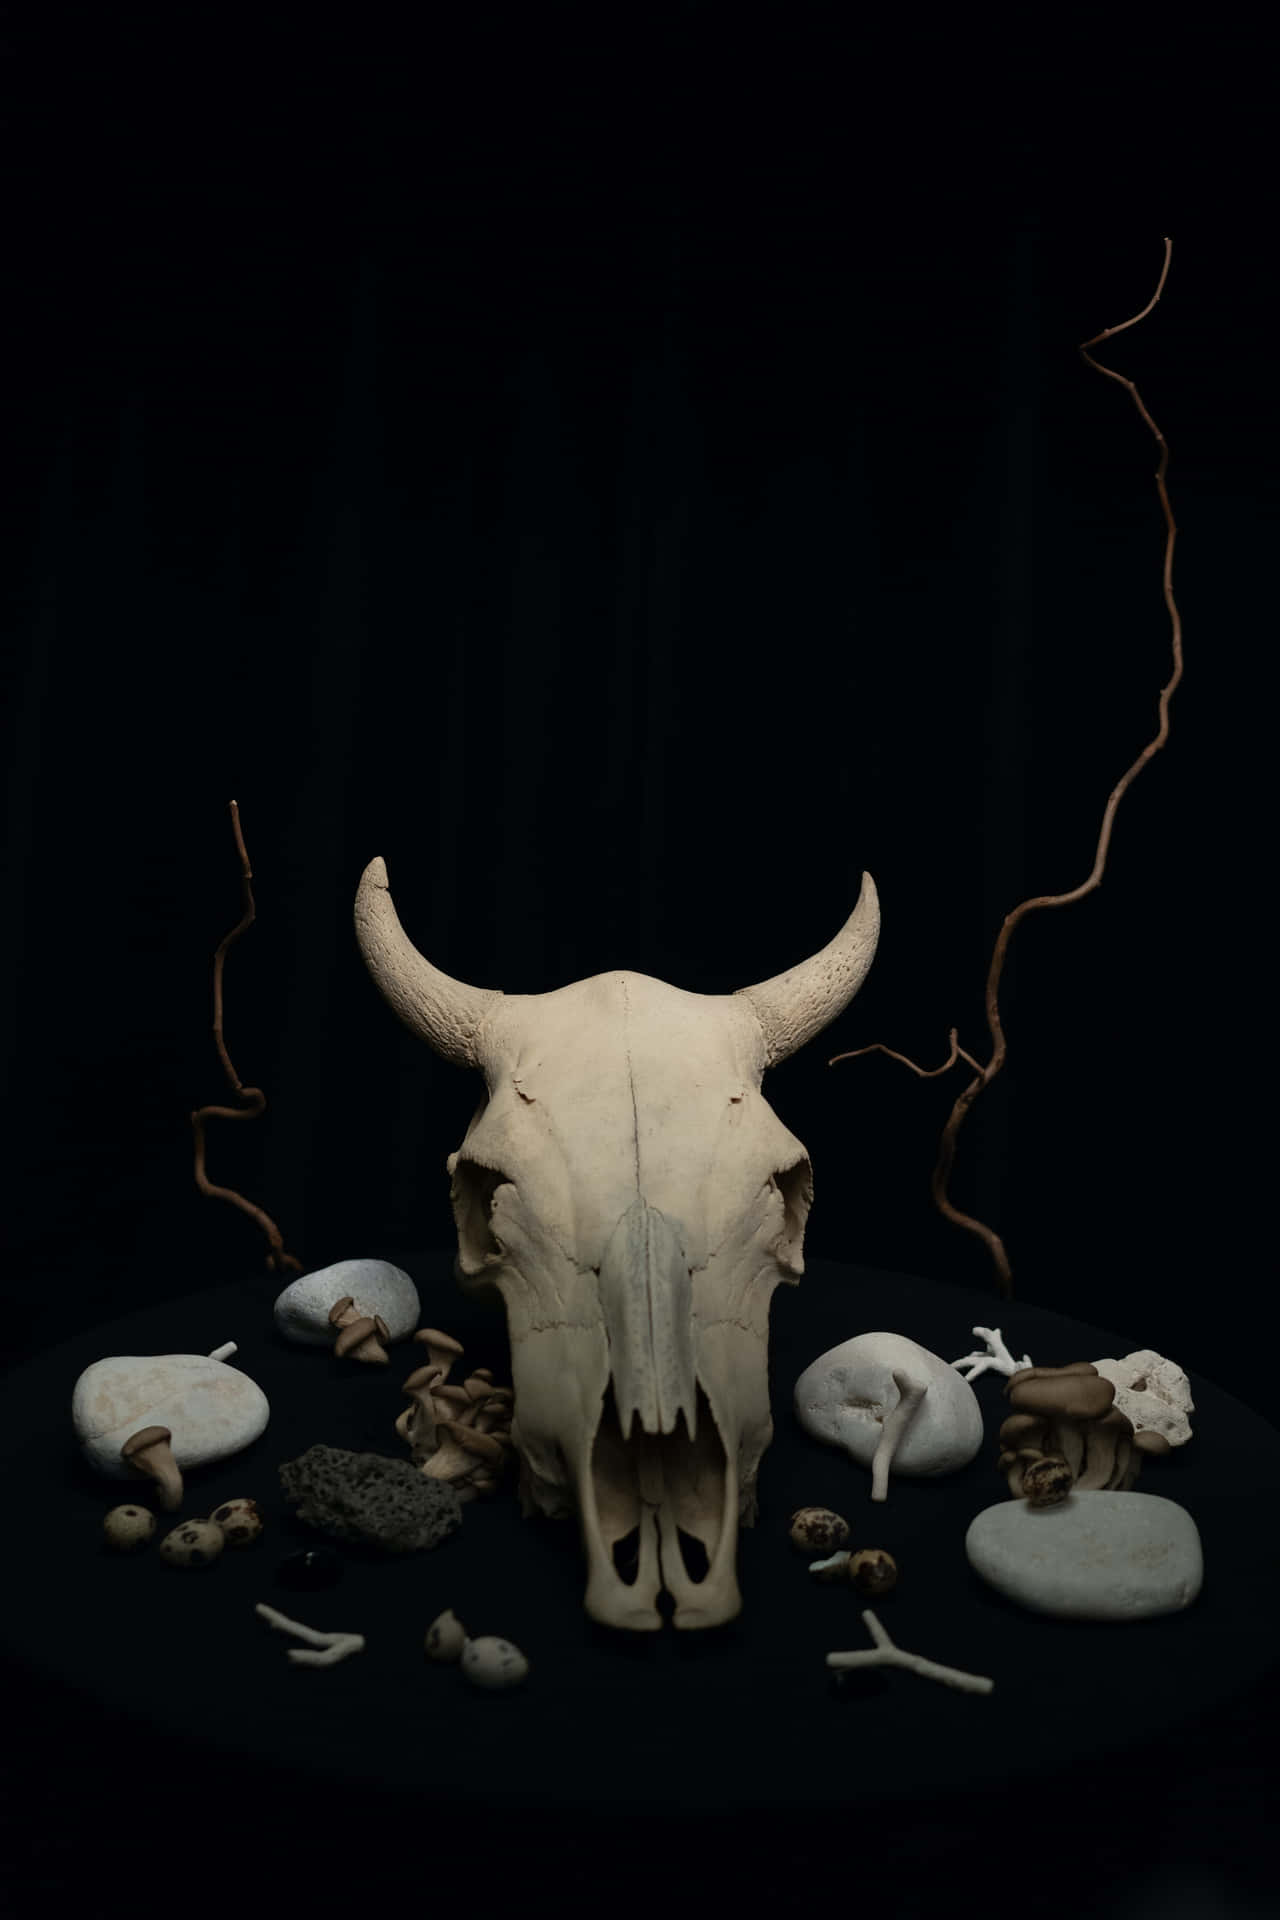 Bull Skull With Bones And Stones Wallpaper